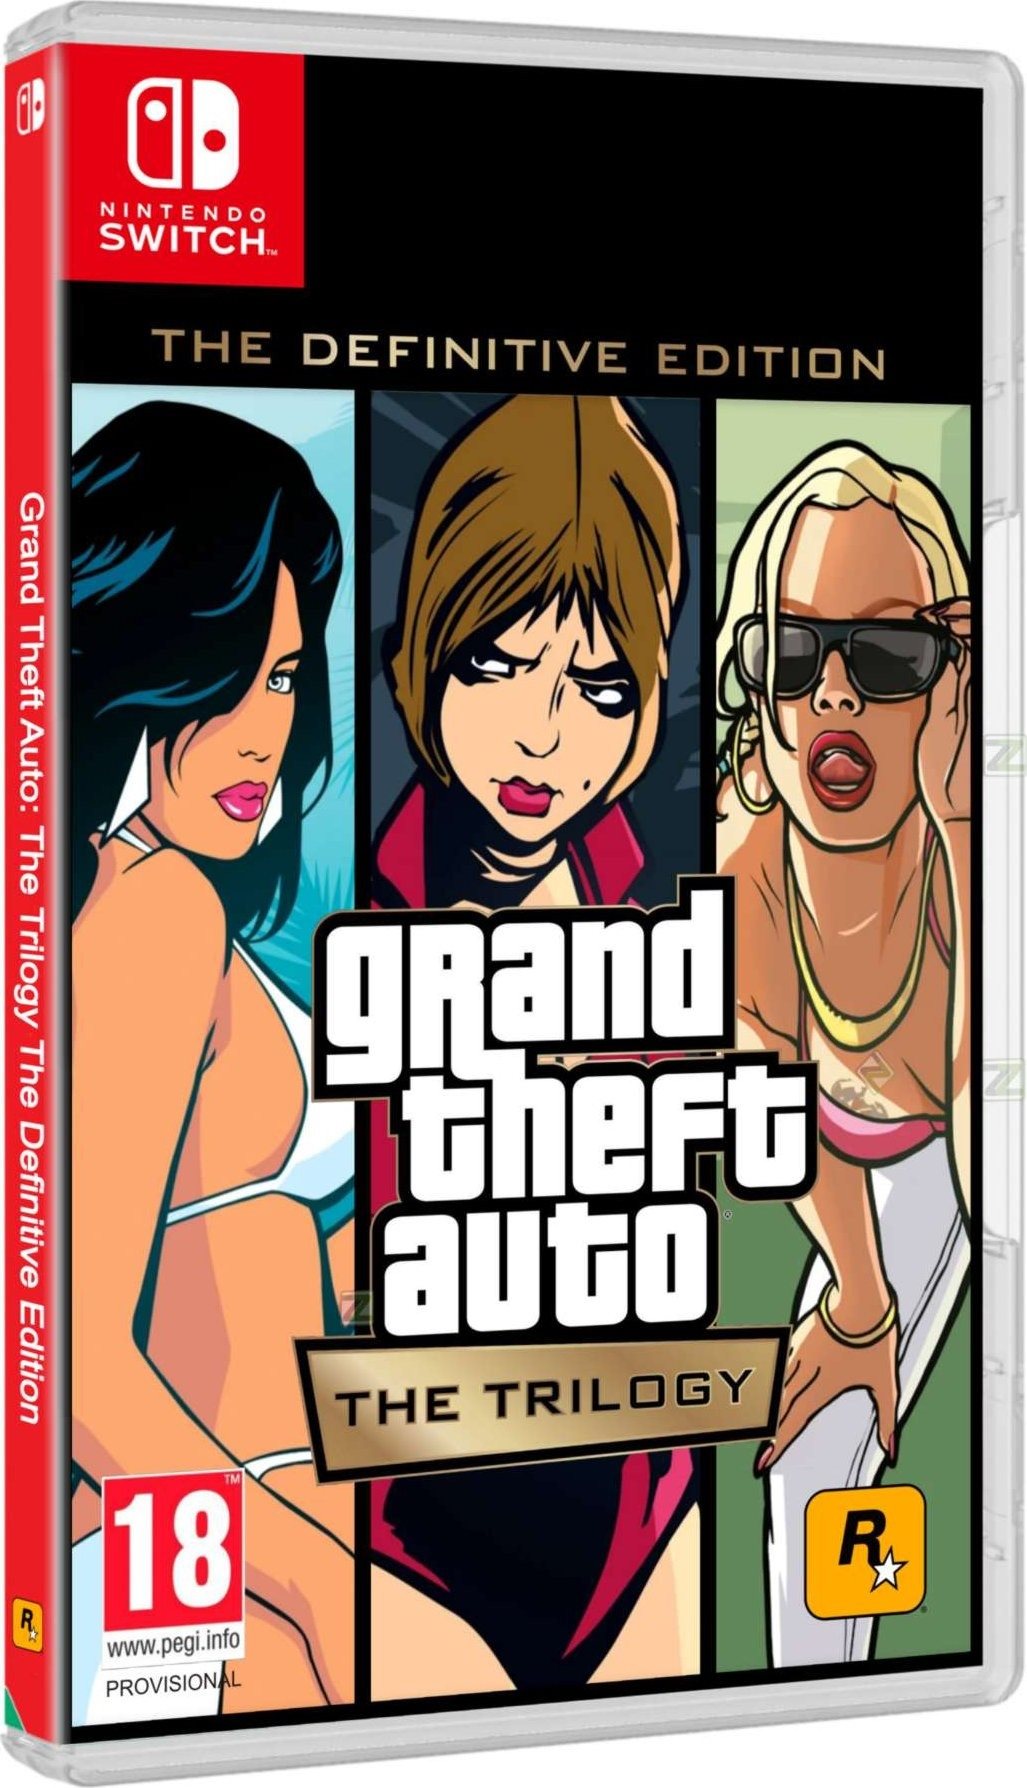 Konzol játék Grand Theft Auto: The Trilogy (GTA) - The Definitive Edition - Nintendo Switch